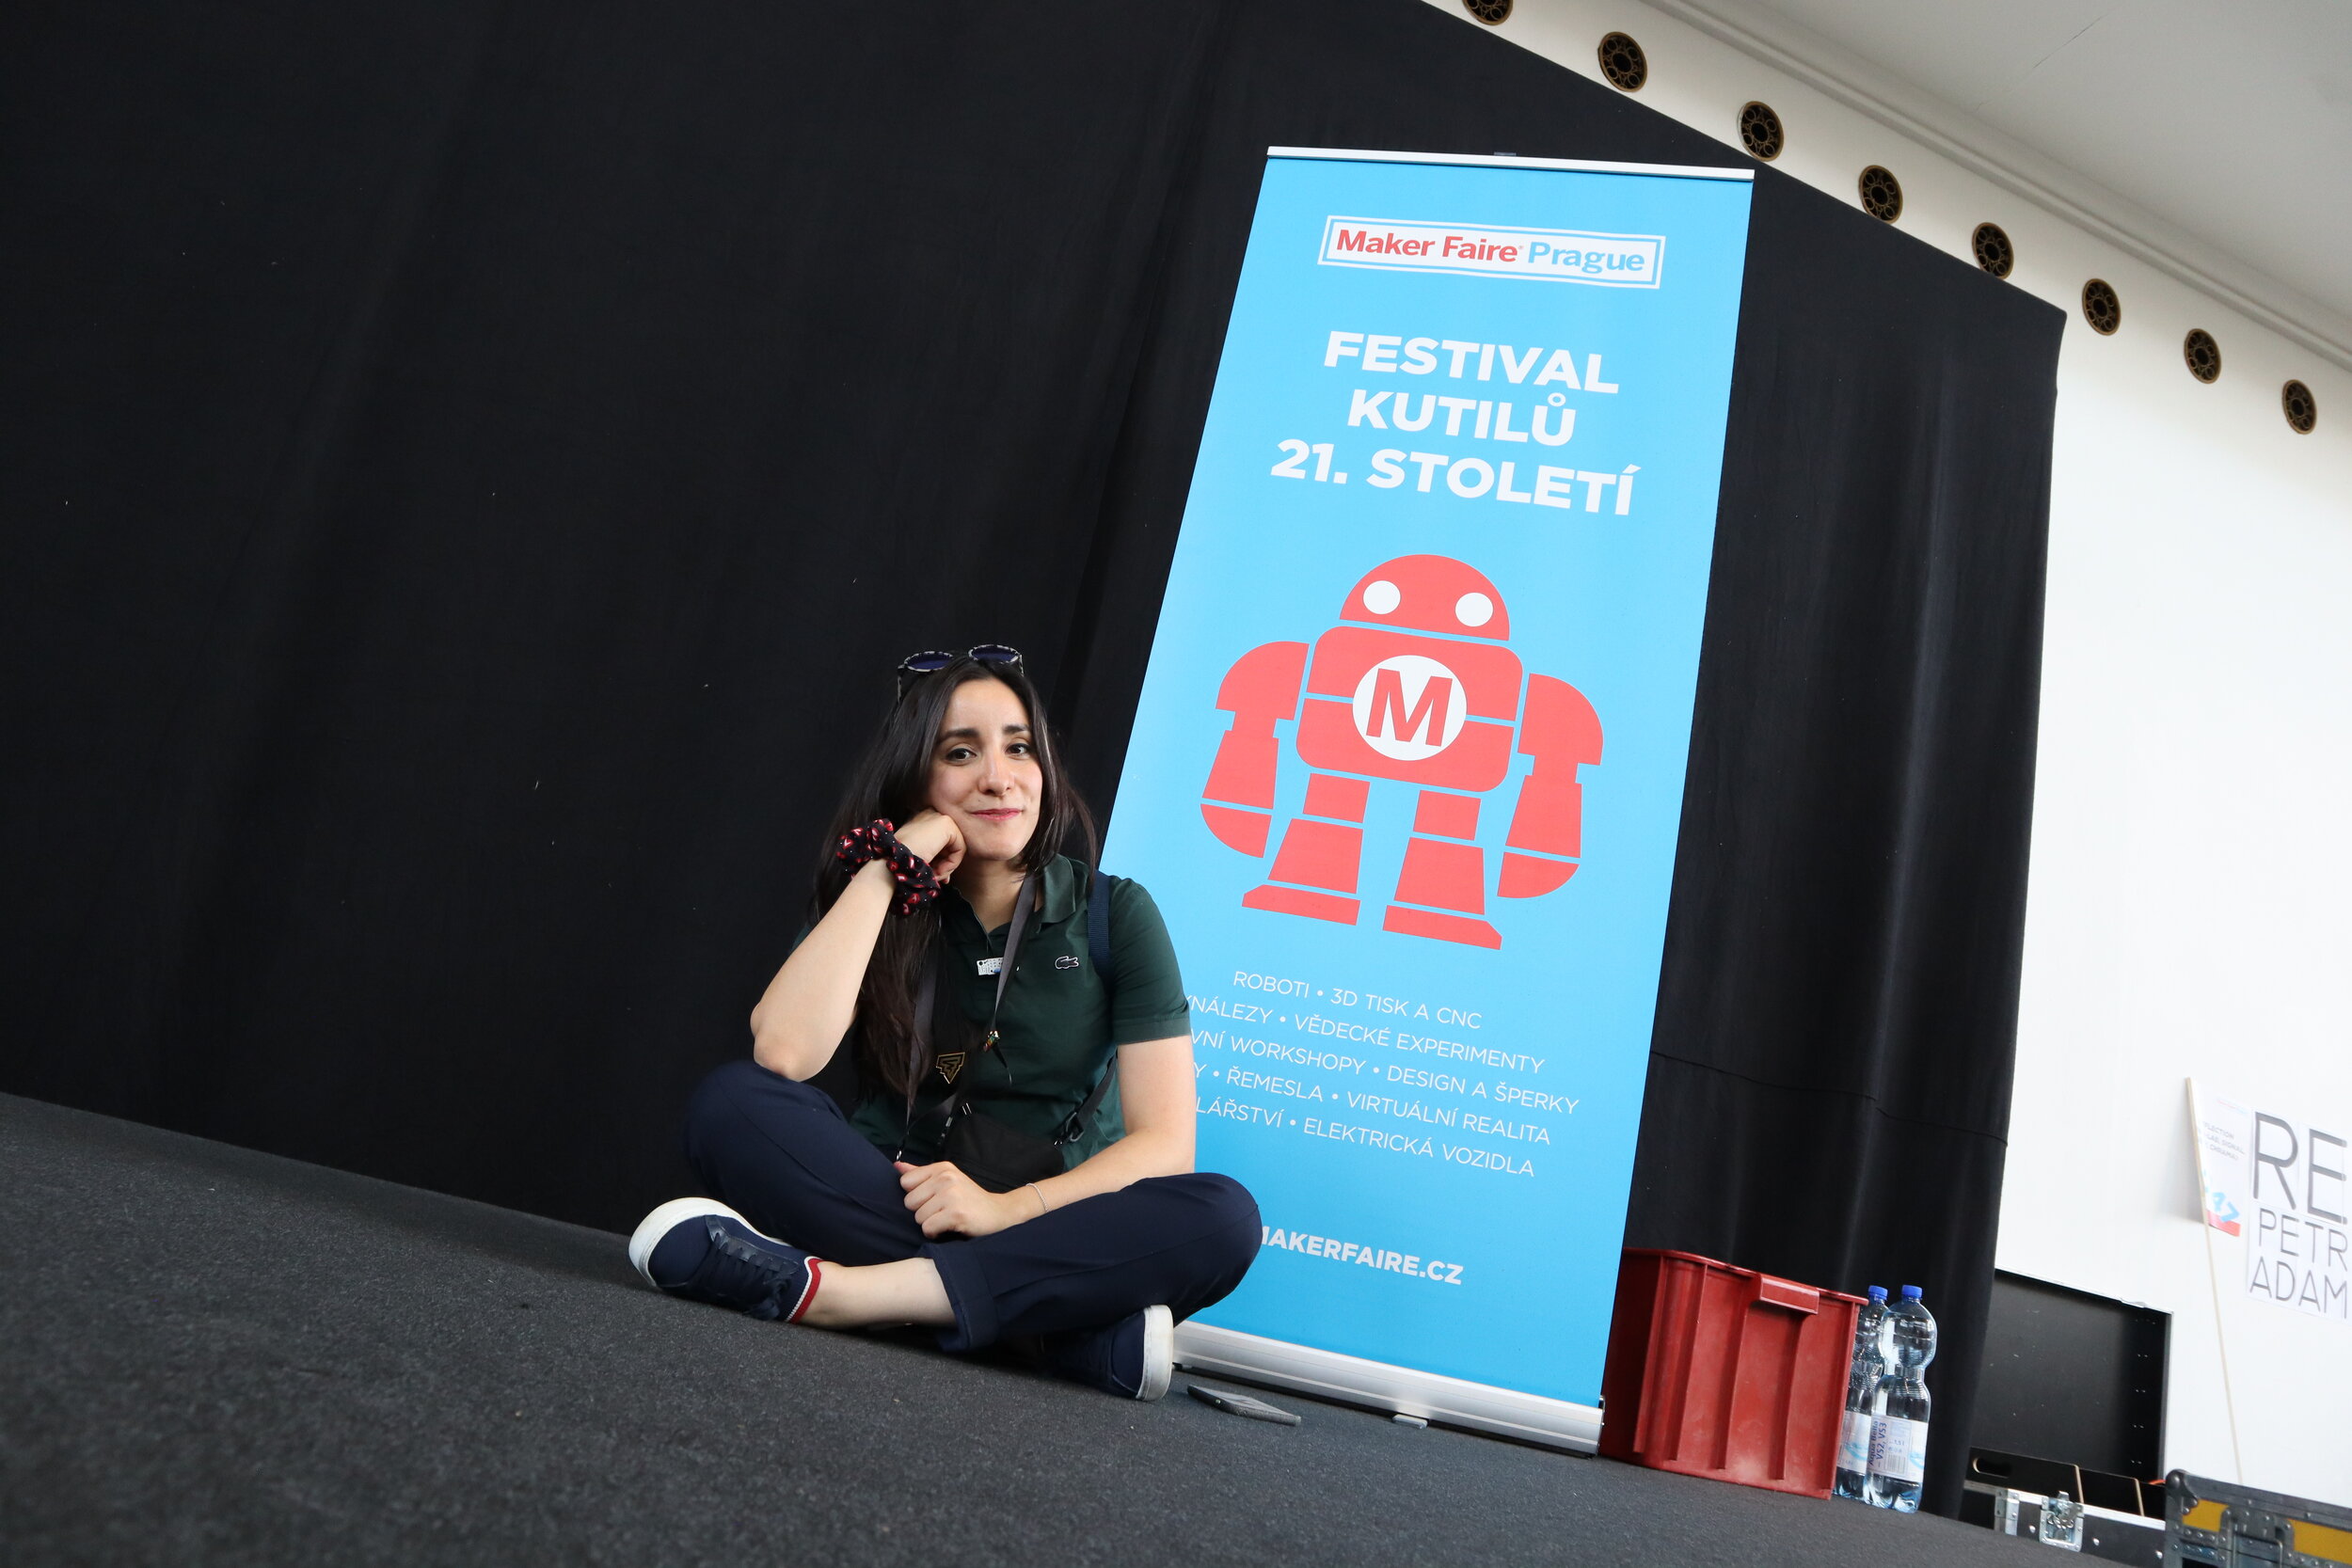 Estefannie after her talk at Maker Faire Prague - Prague, Czech Republic, June 2019